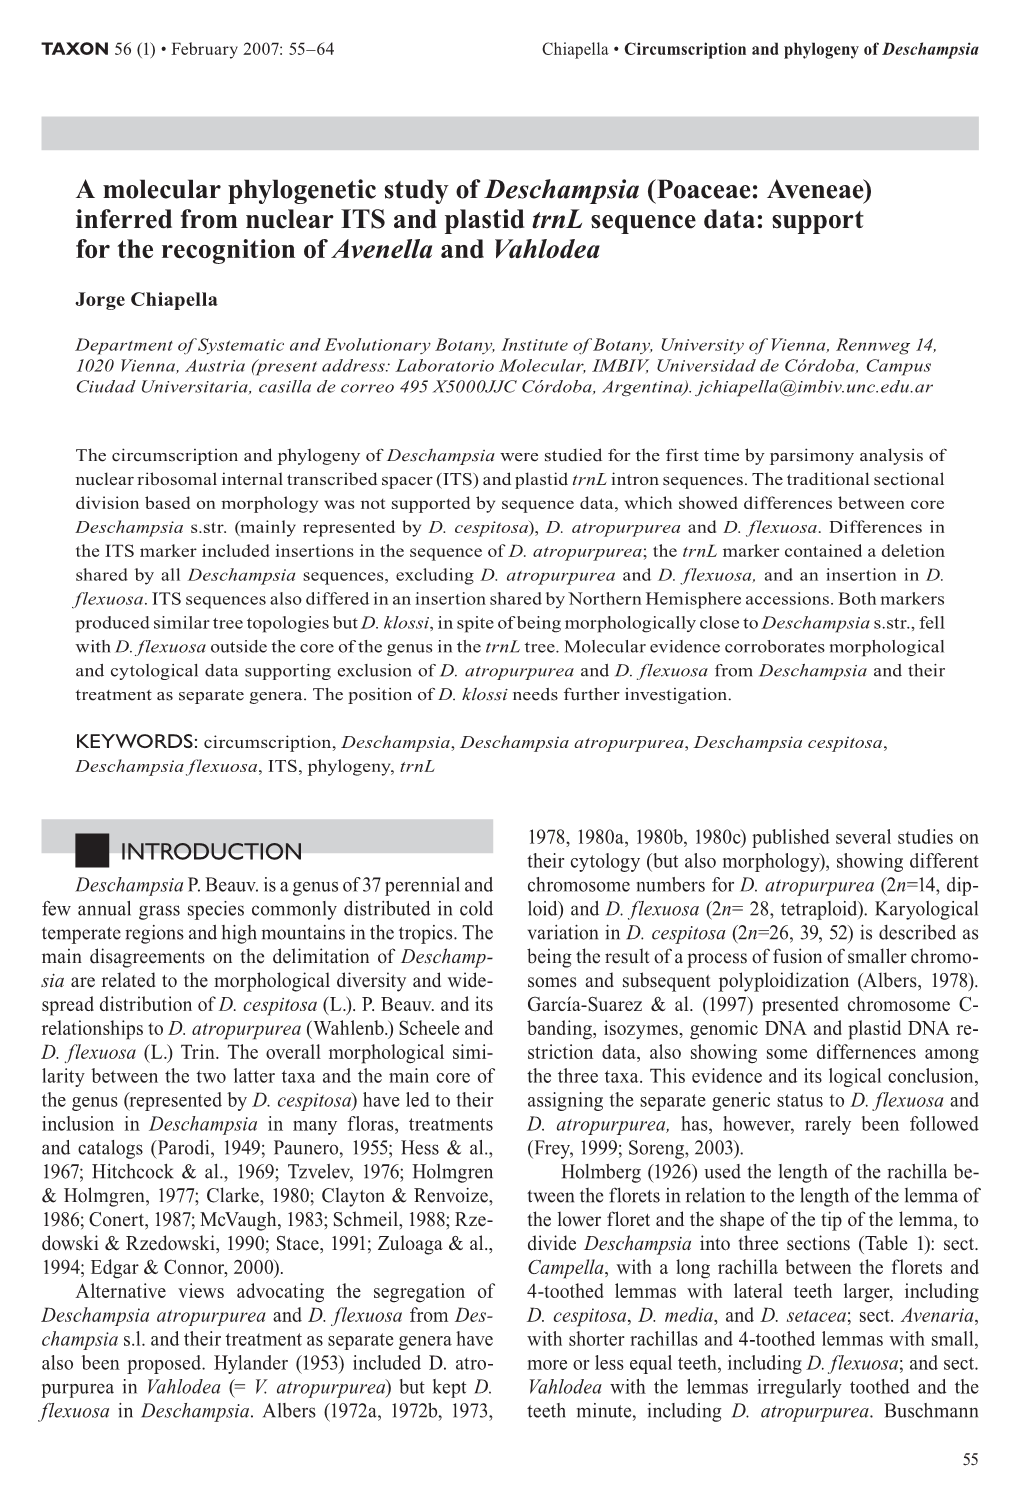 A Molecular Phylogenetic Study of Deschampsia (Poaceae: Aveneae